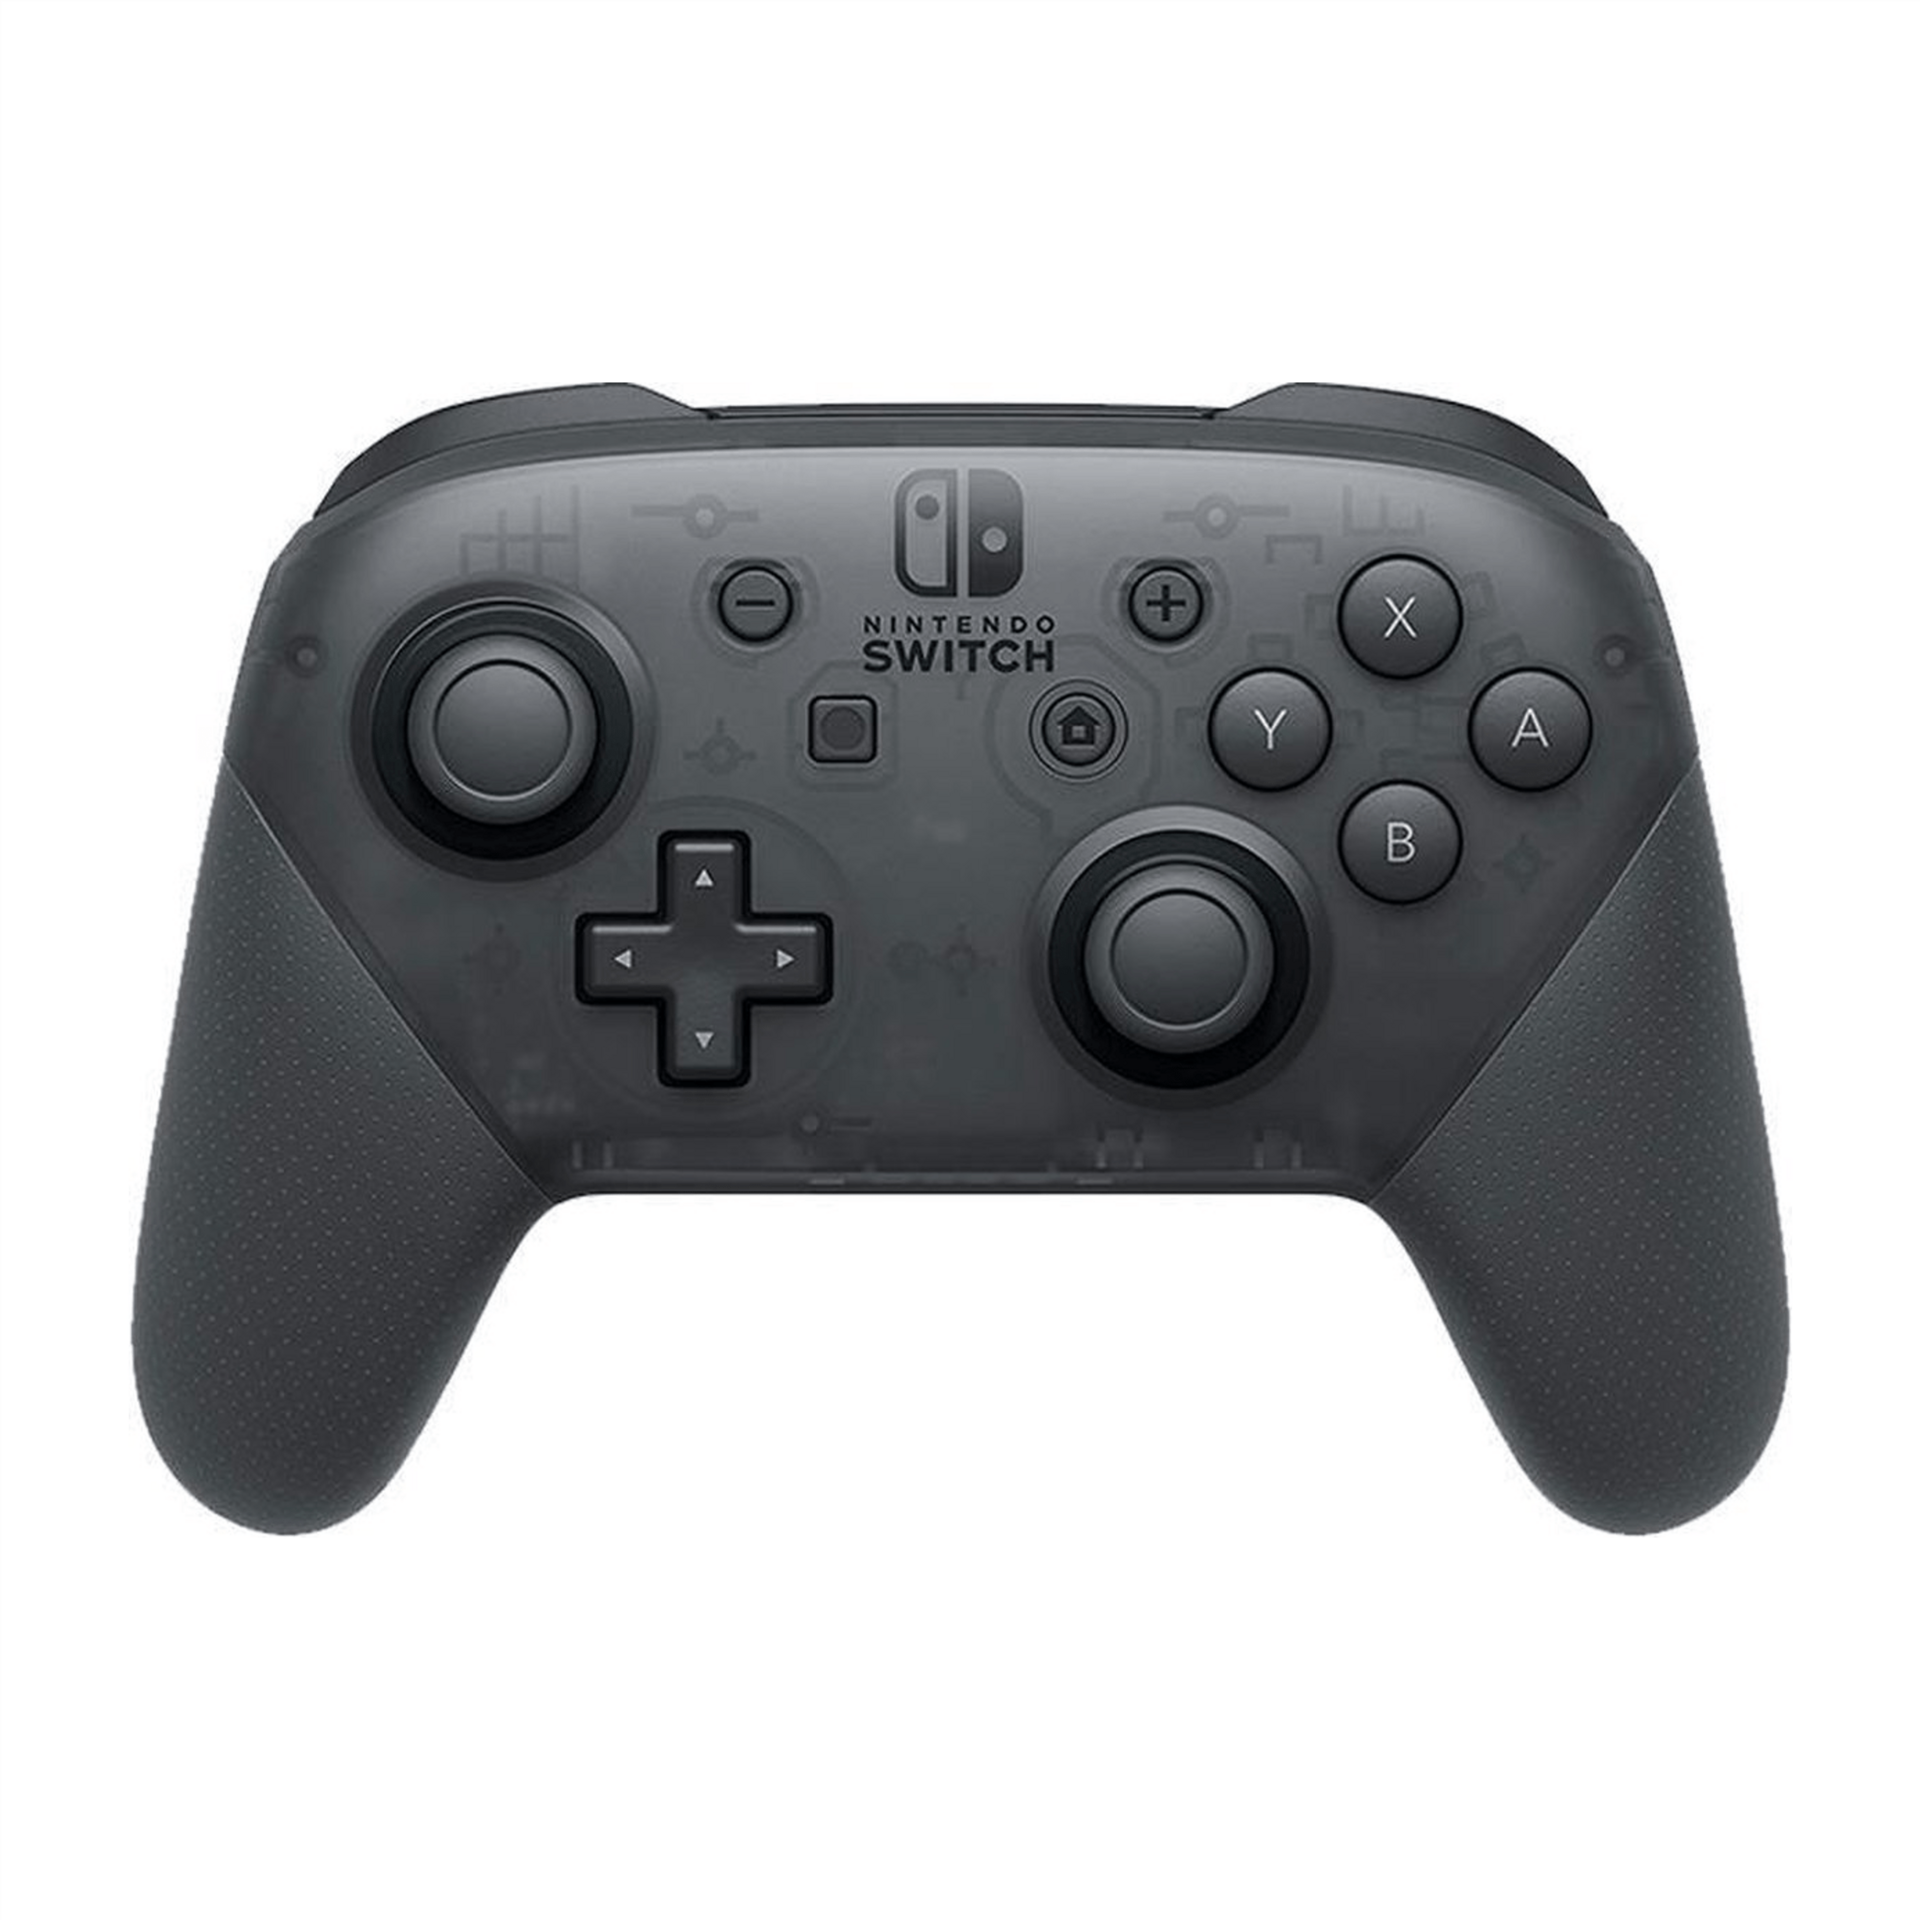 Originele Nintendo Switch Pro Controller Kopen | Nintendo Switch Hardware